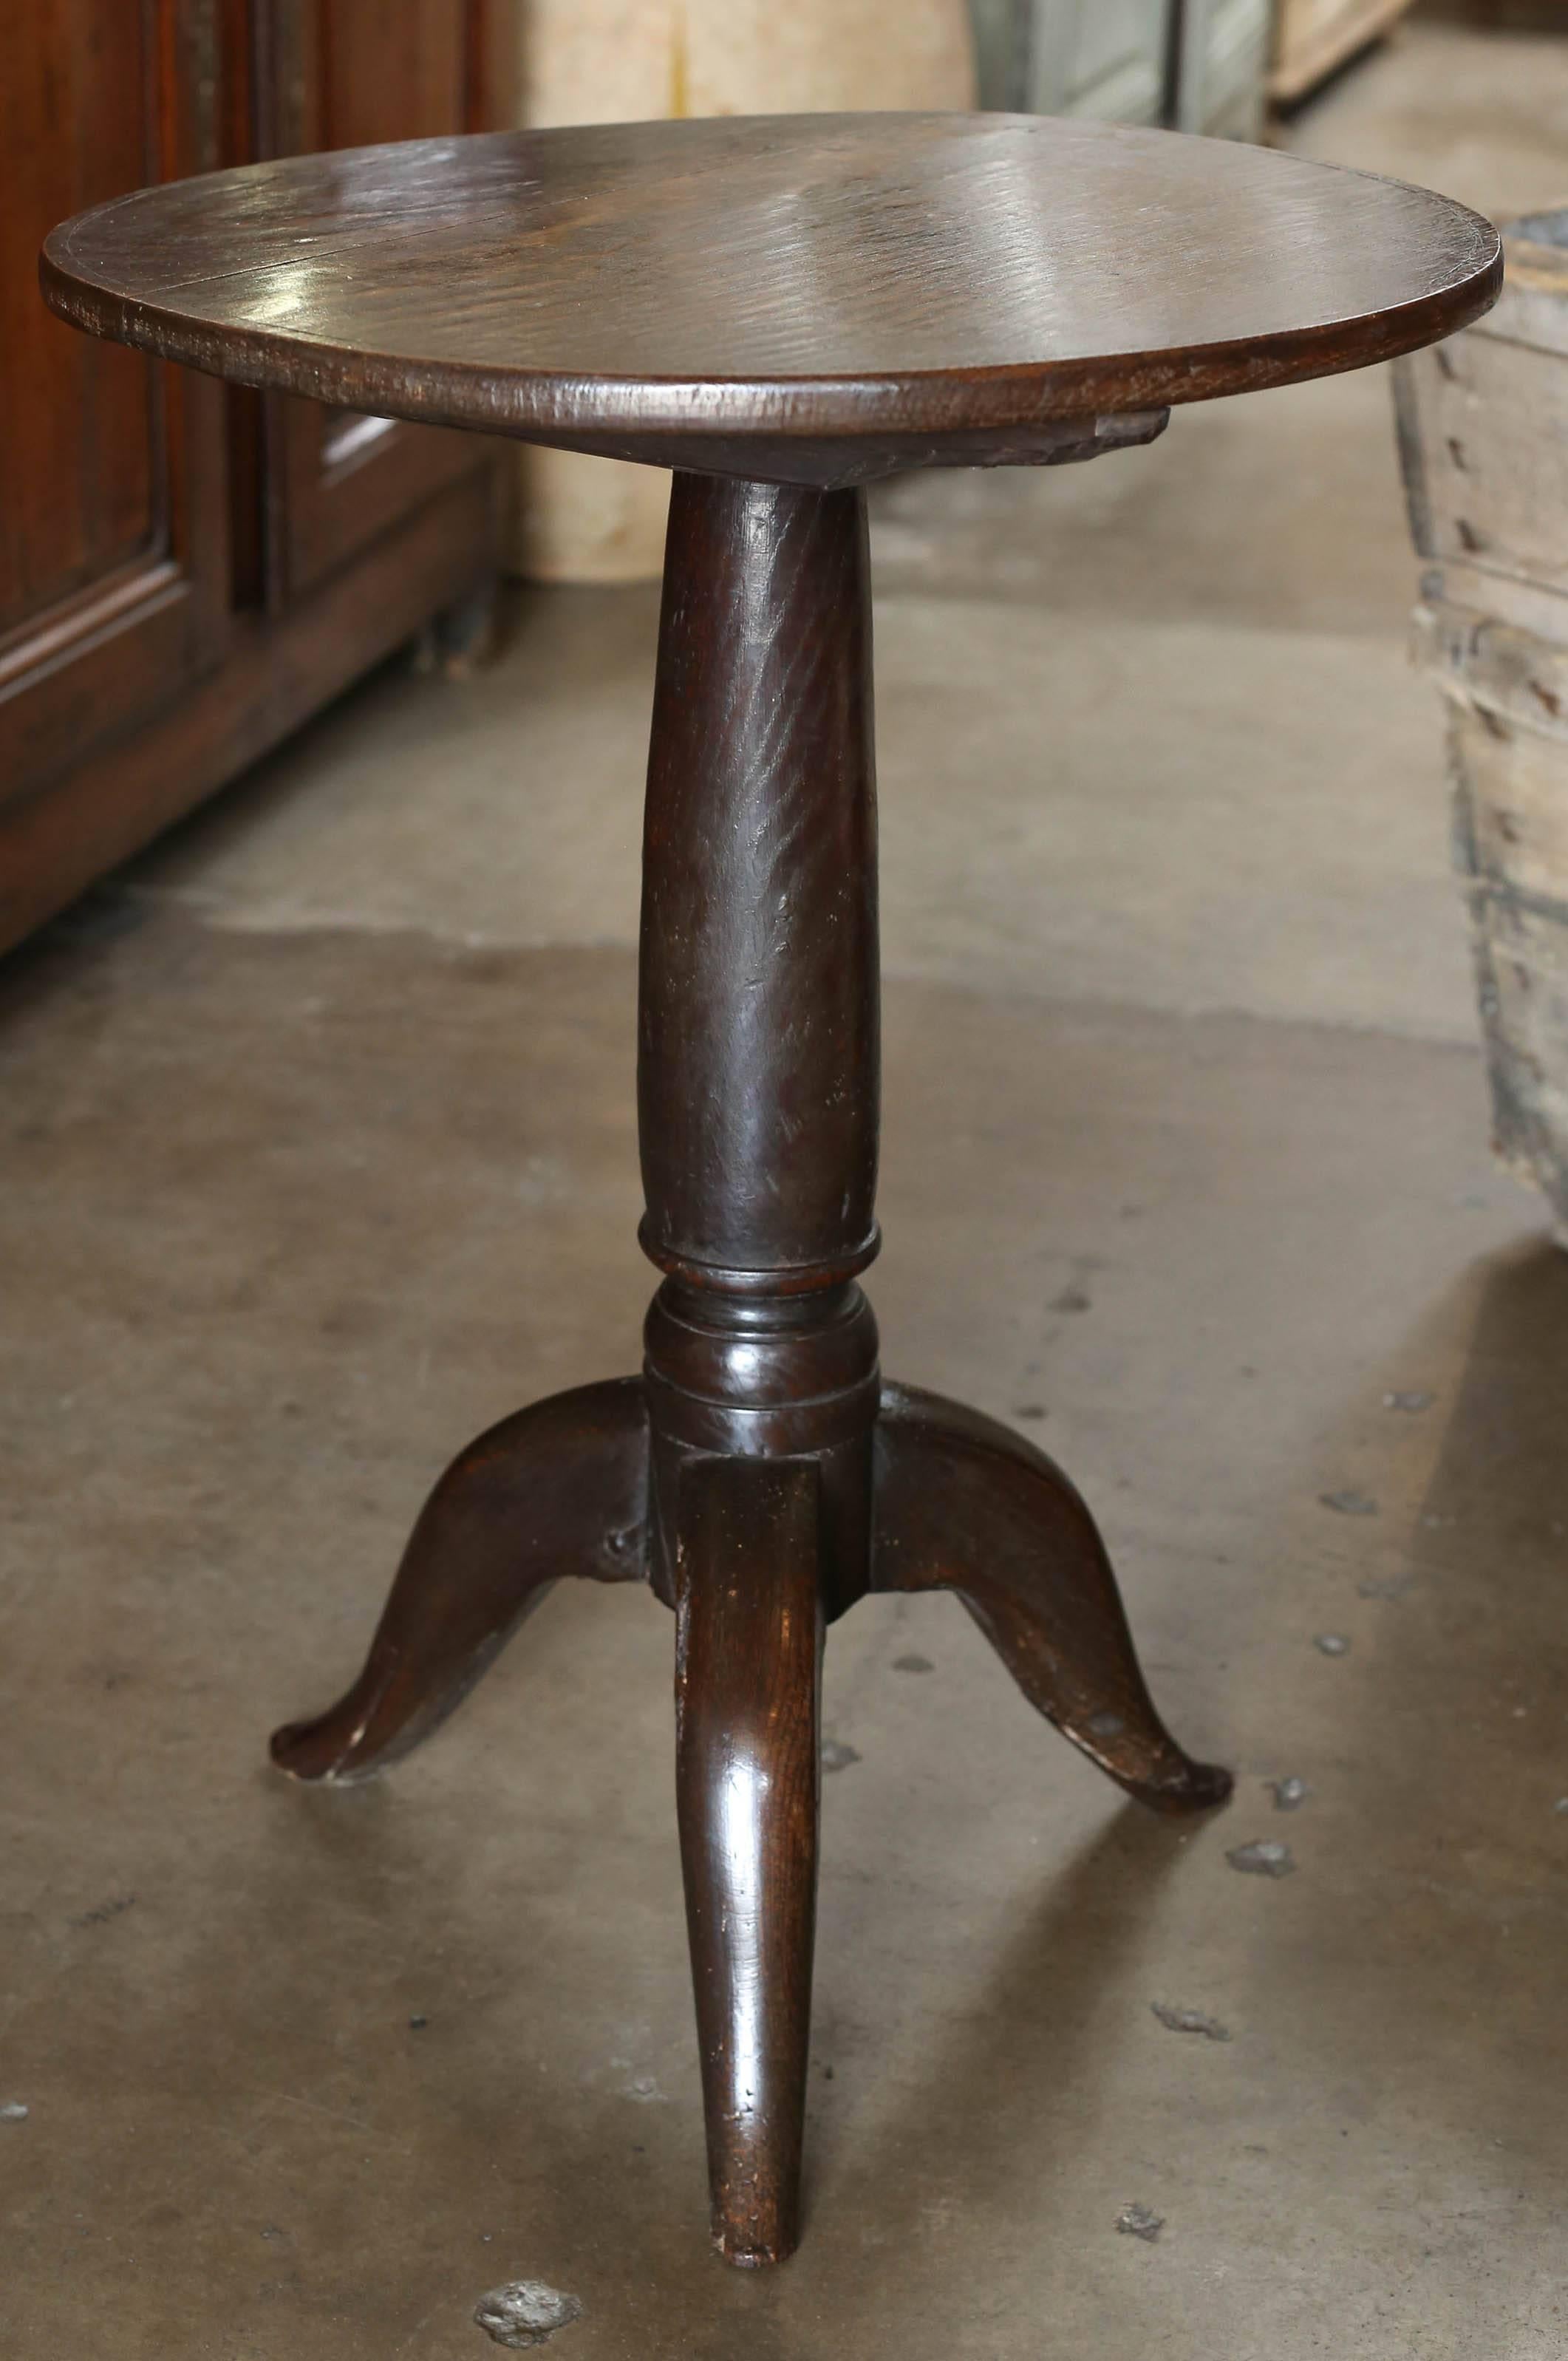 19th century Folk Art oak tripod side table with beautiful patina.